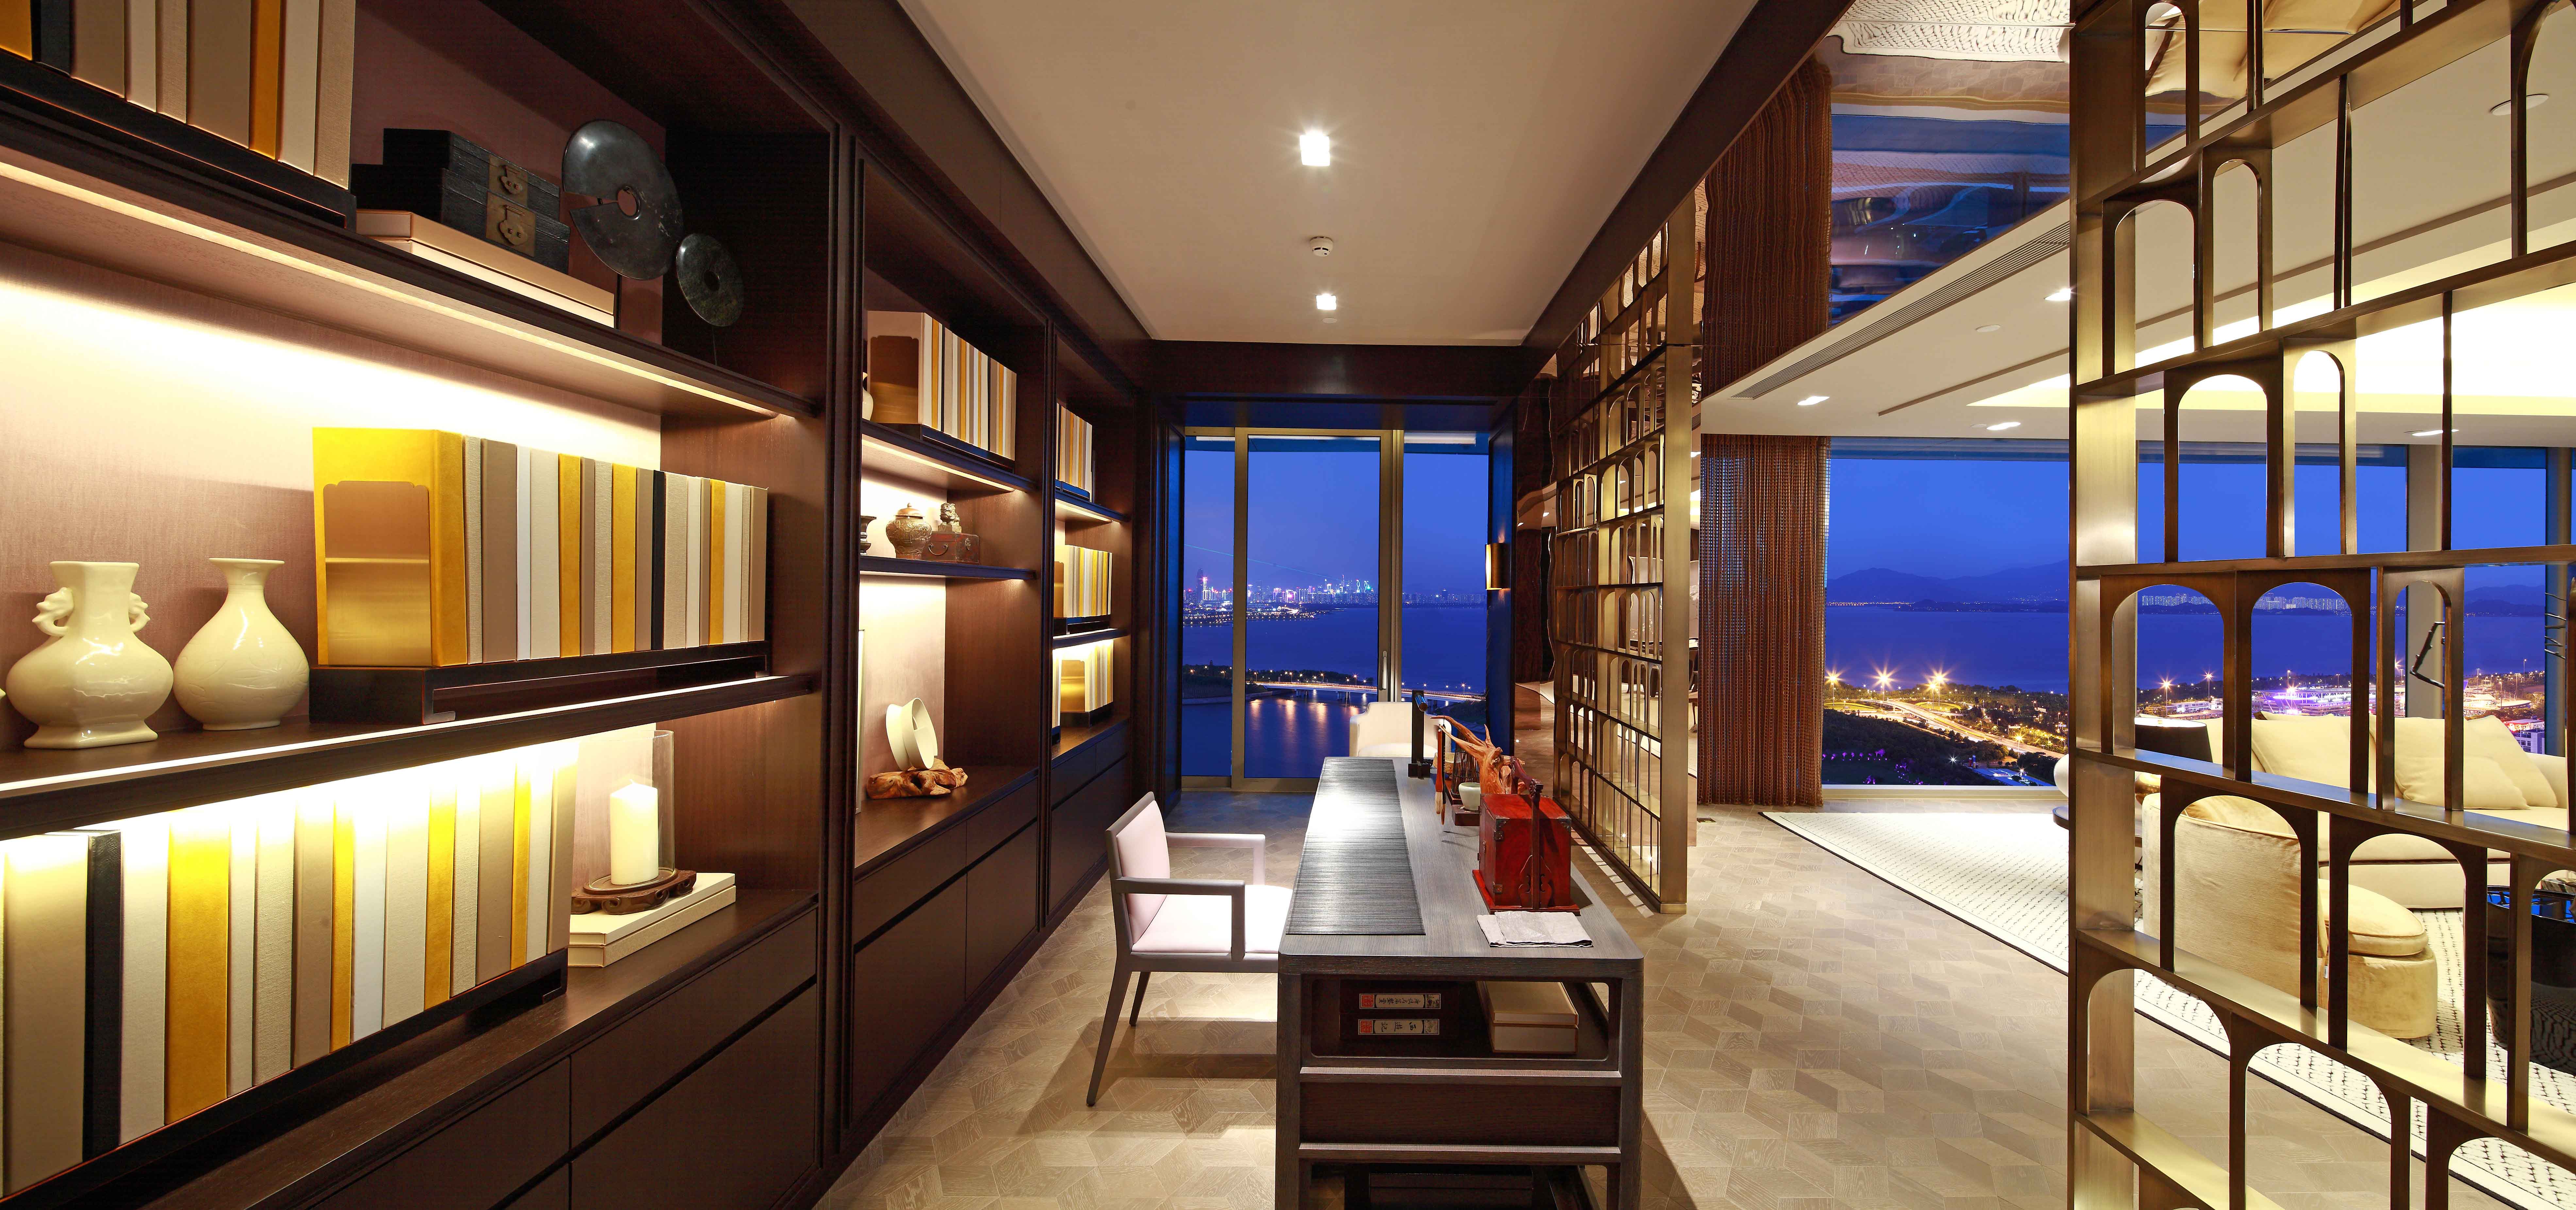 China Hotel Furniture Modern Walk in Closet Designs Wood Door Bedroom Furniture Storage Drawers Wardrobes